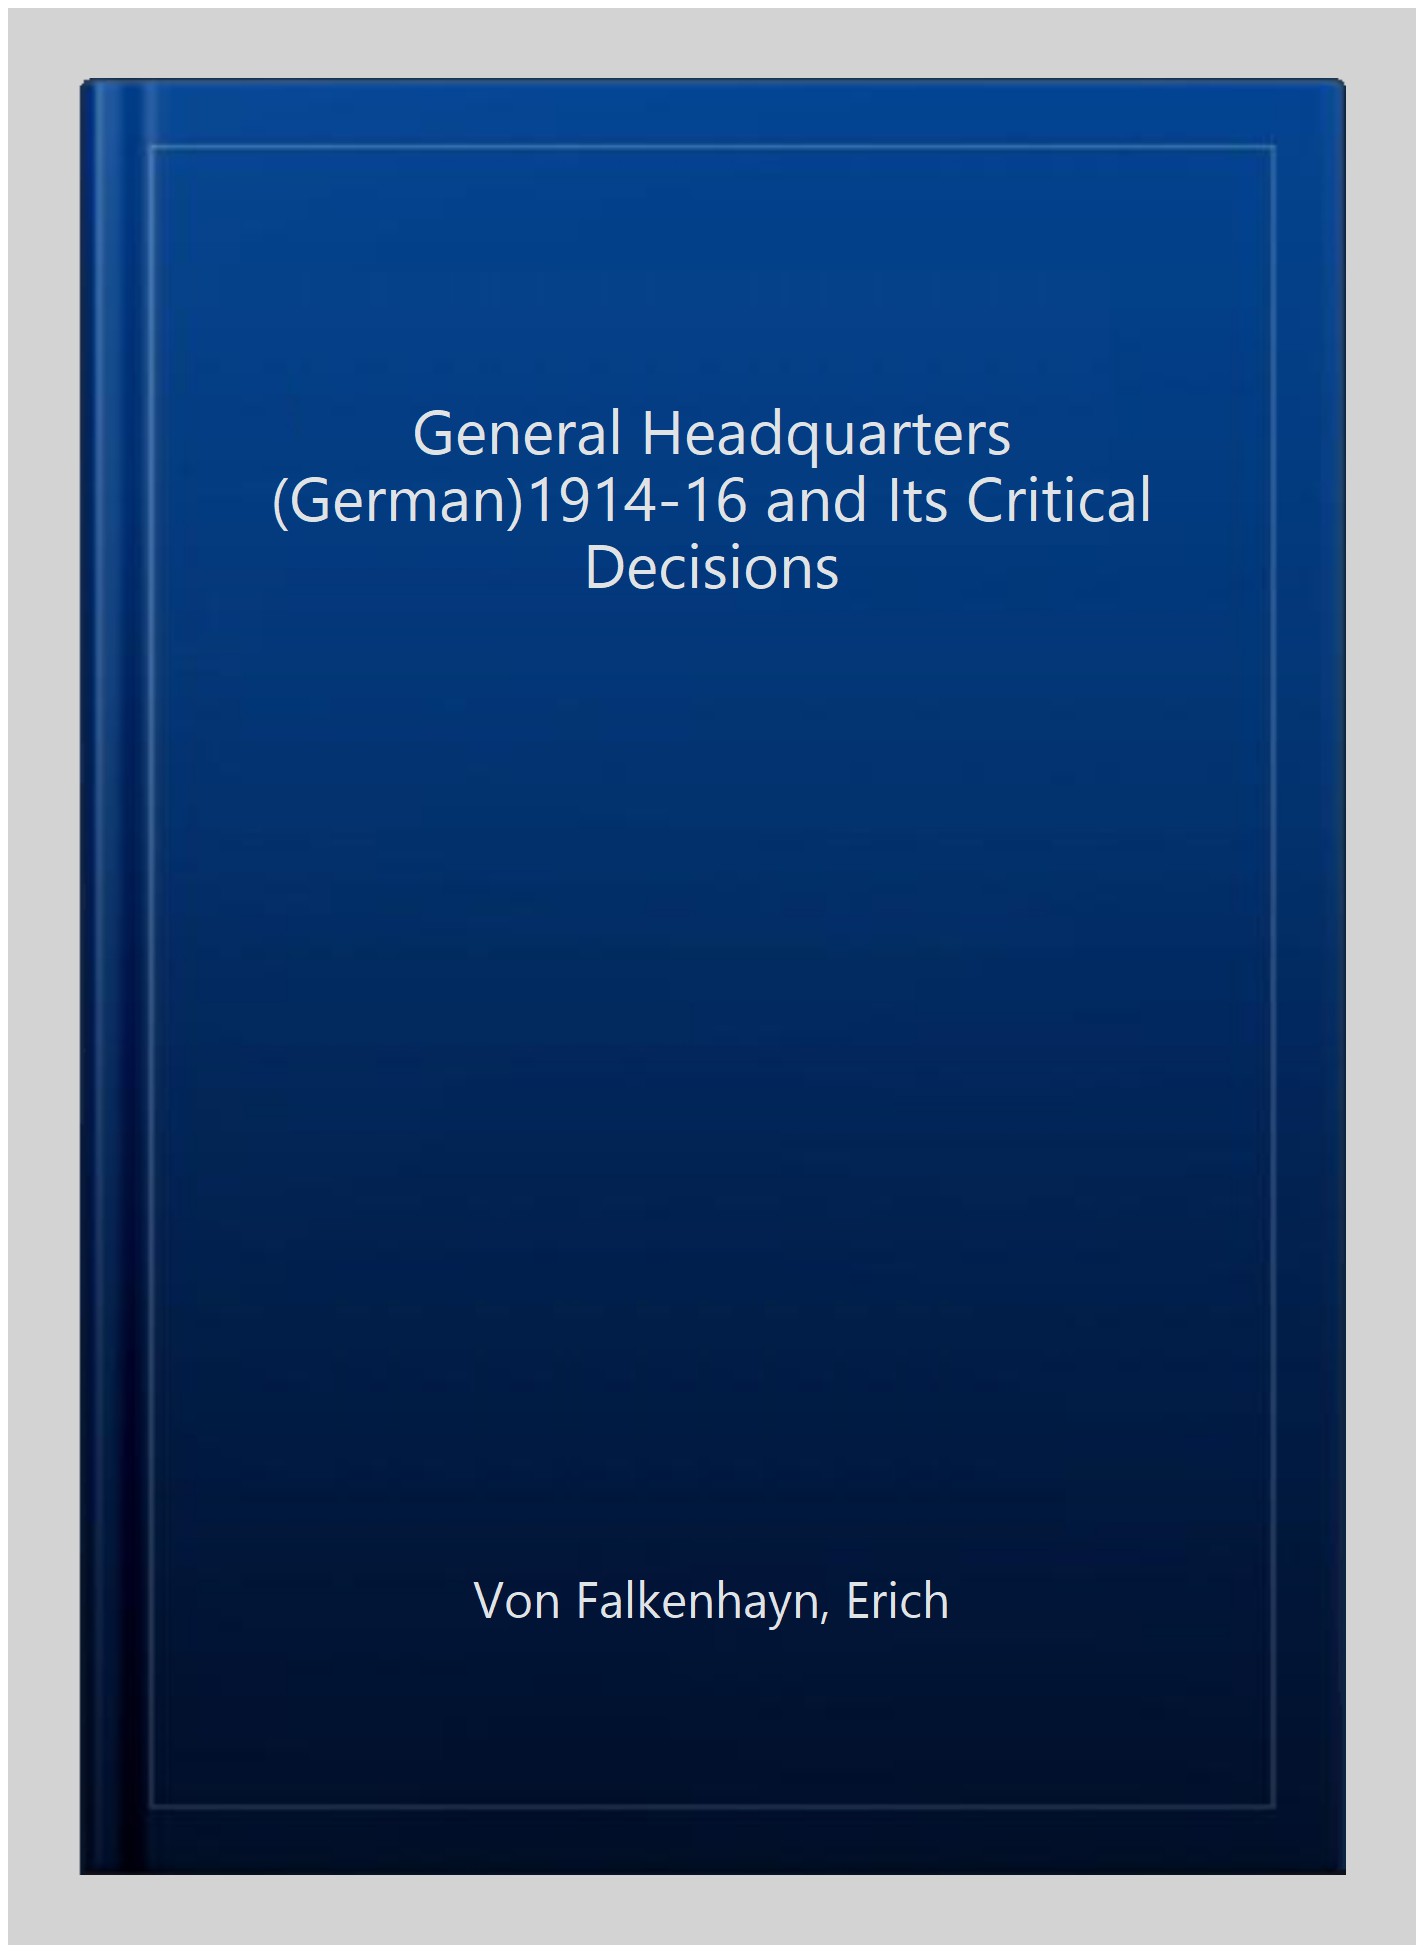 General Headquarters (German)1914-16 and Its Critical Decisions - Von Falkenhayn, Erich